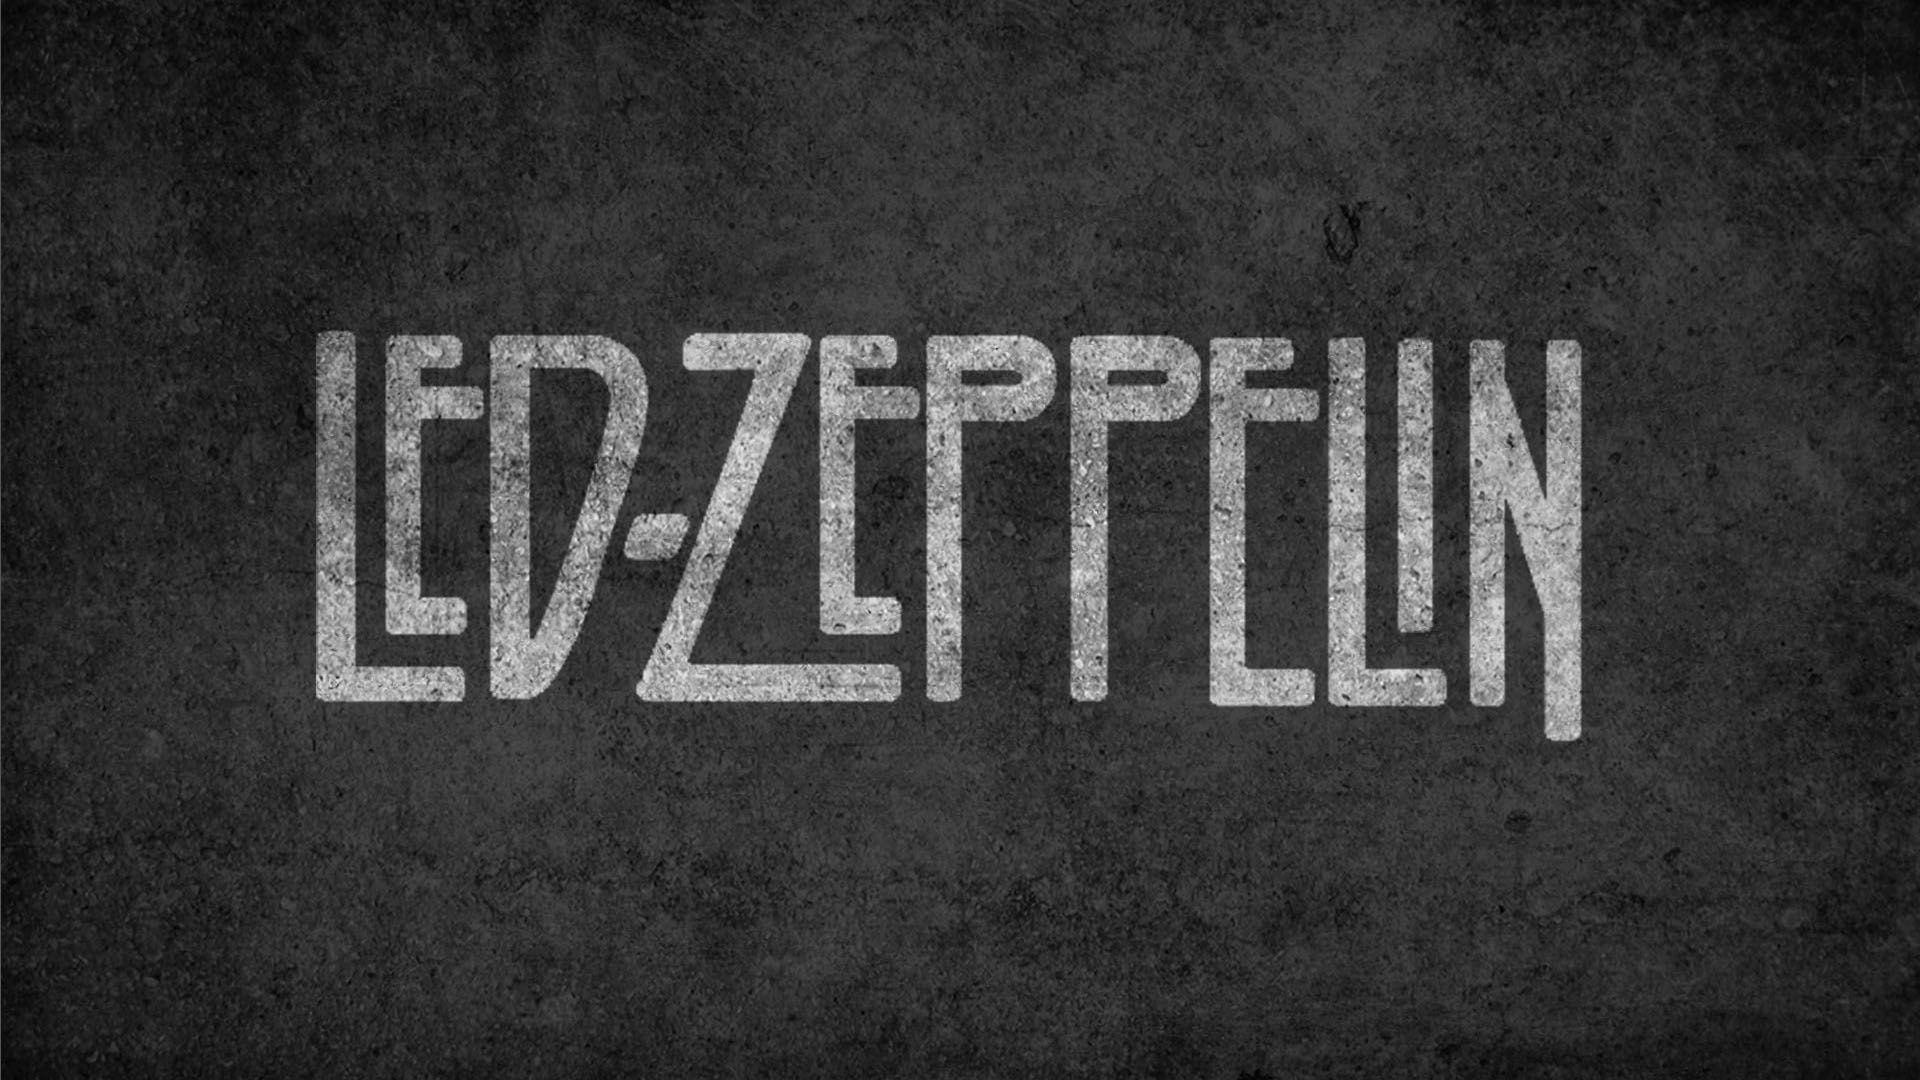 Led Zeppelin HD Wallpaper for desktop download